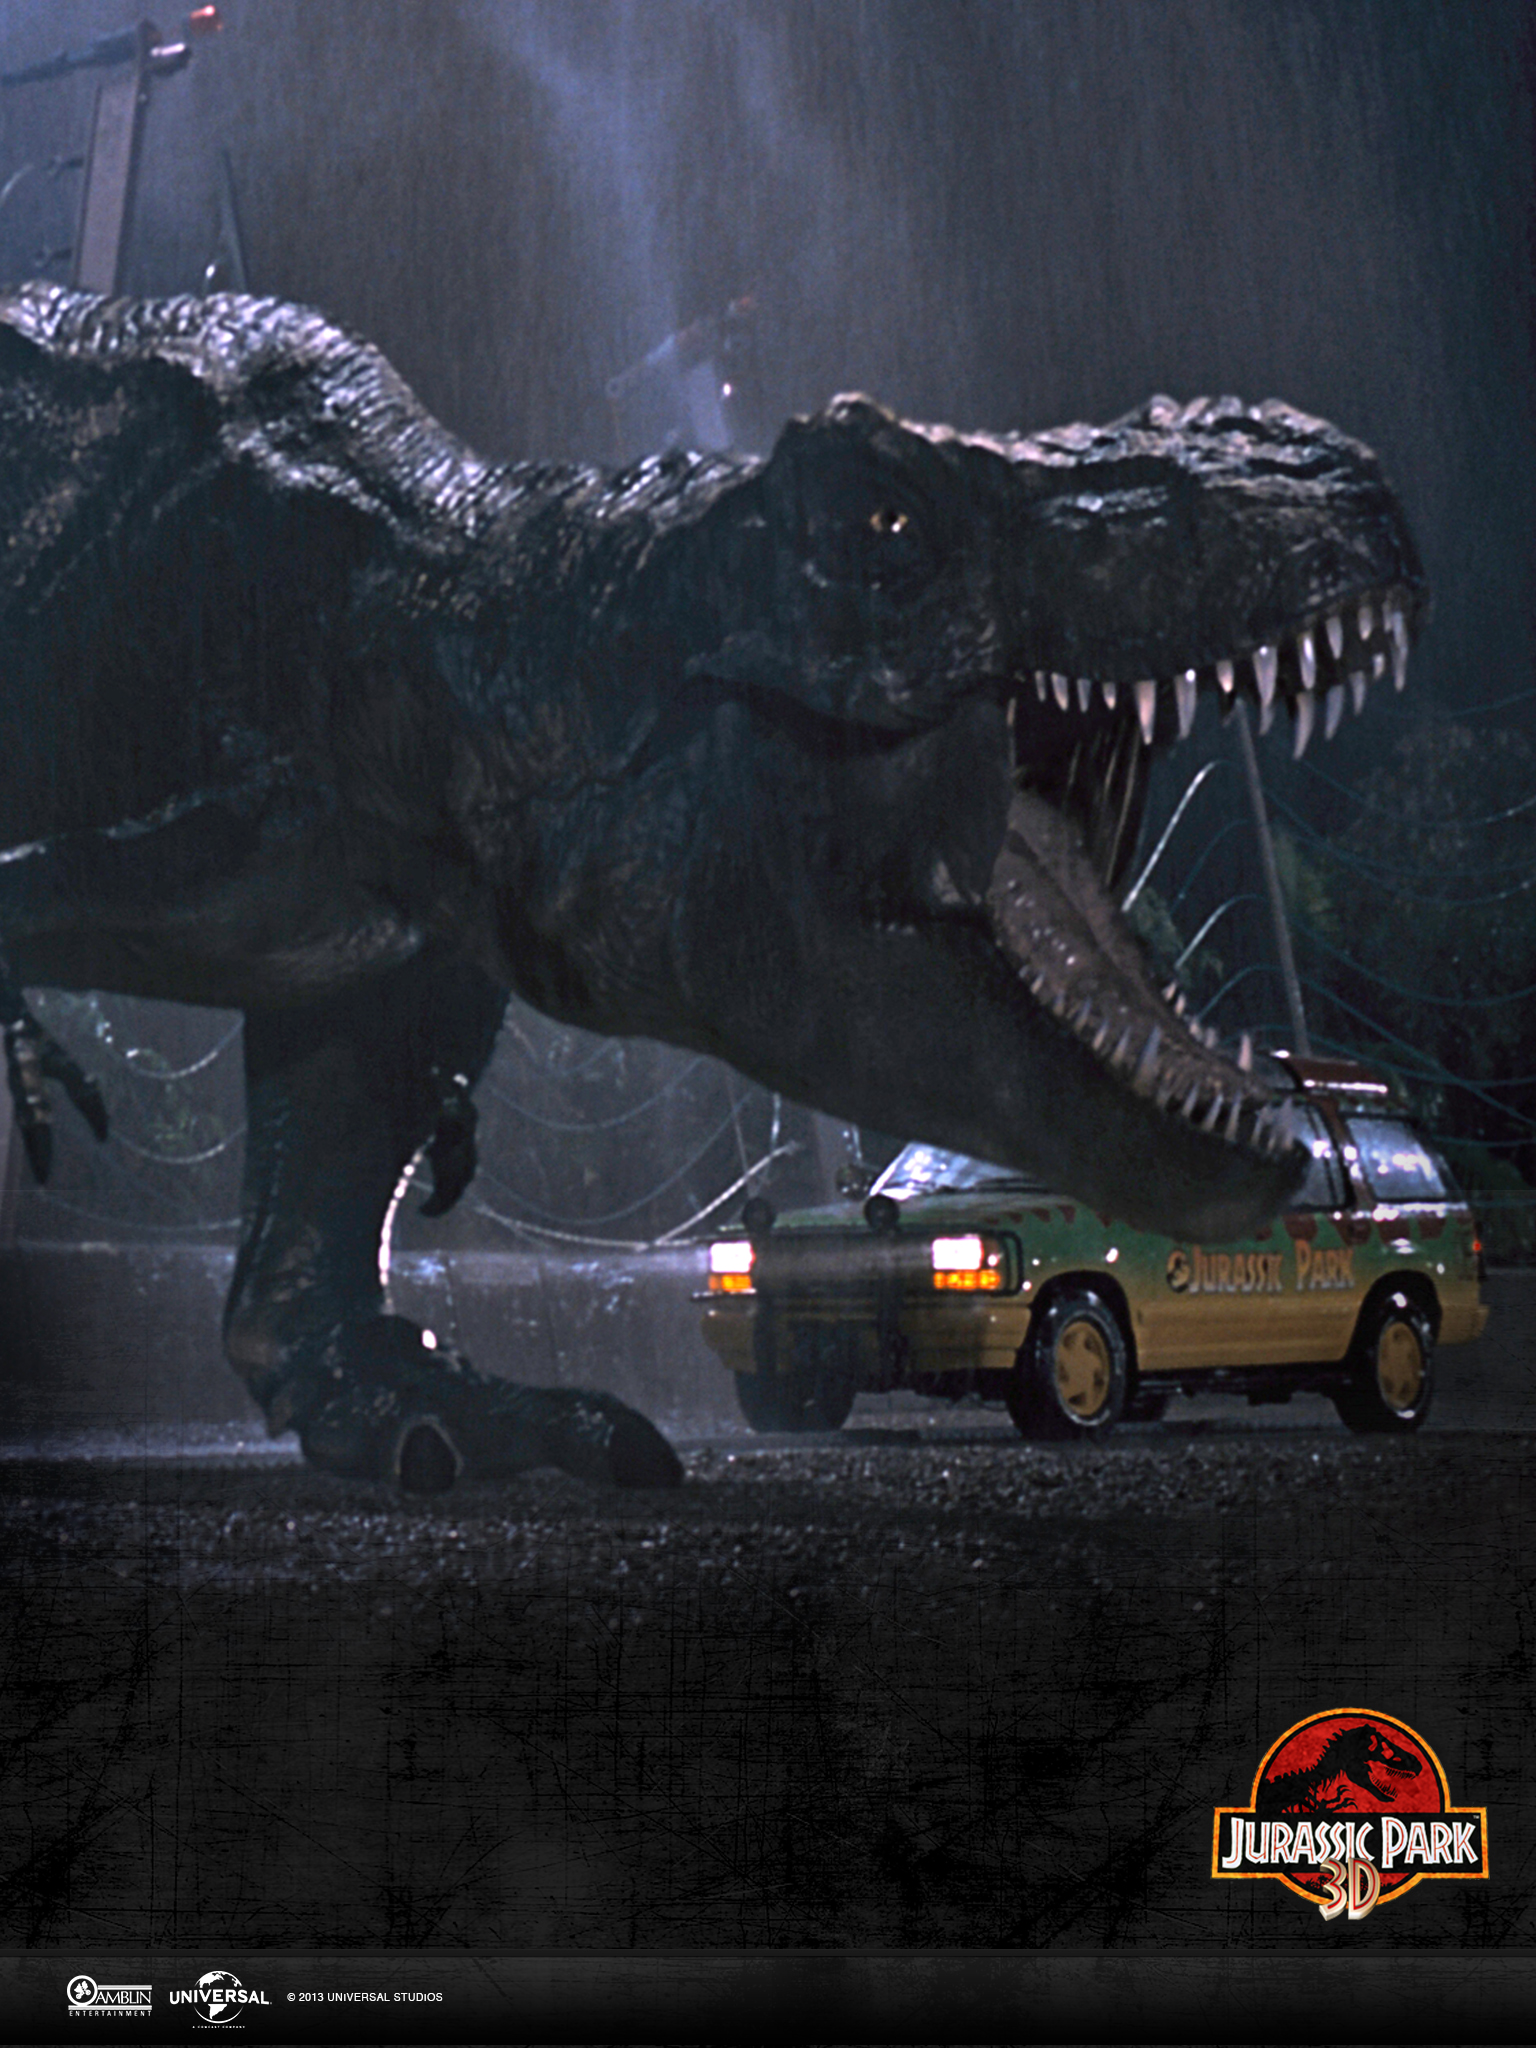 Free download Jurassic Park 3 Wallpapers Jurassic park 3d wallpaper for